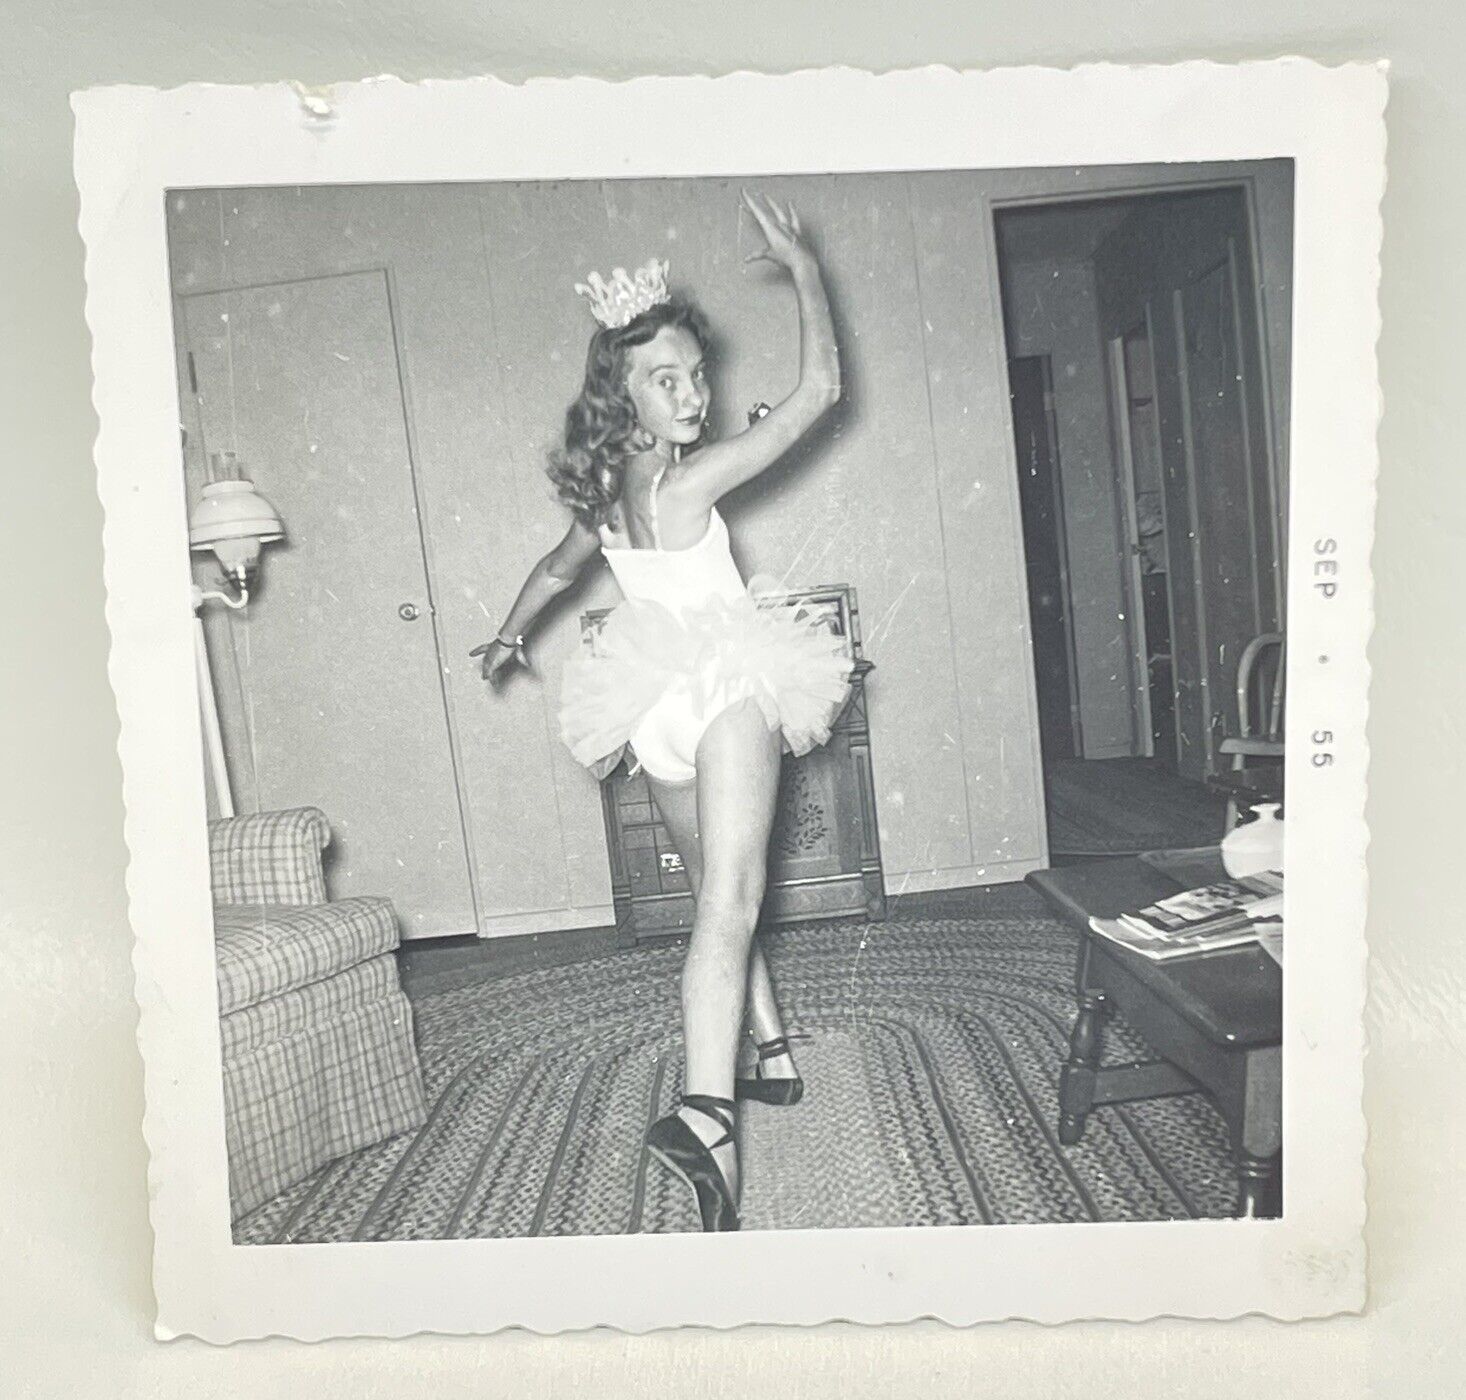 Vtg 1950s Snapshot Photo Girl Ballerina Tutu Crown Pointe Pose in Living Room